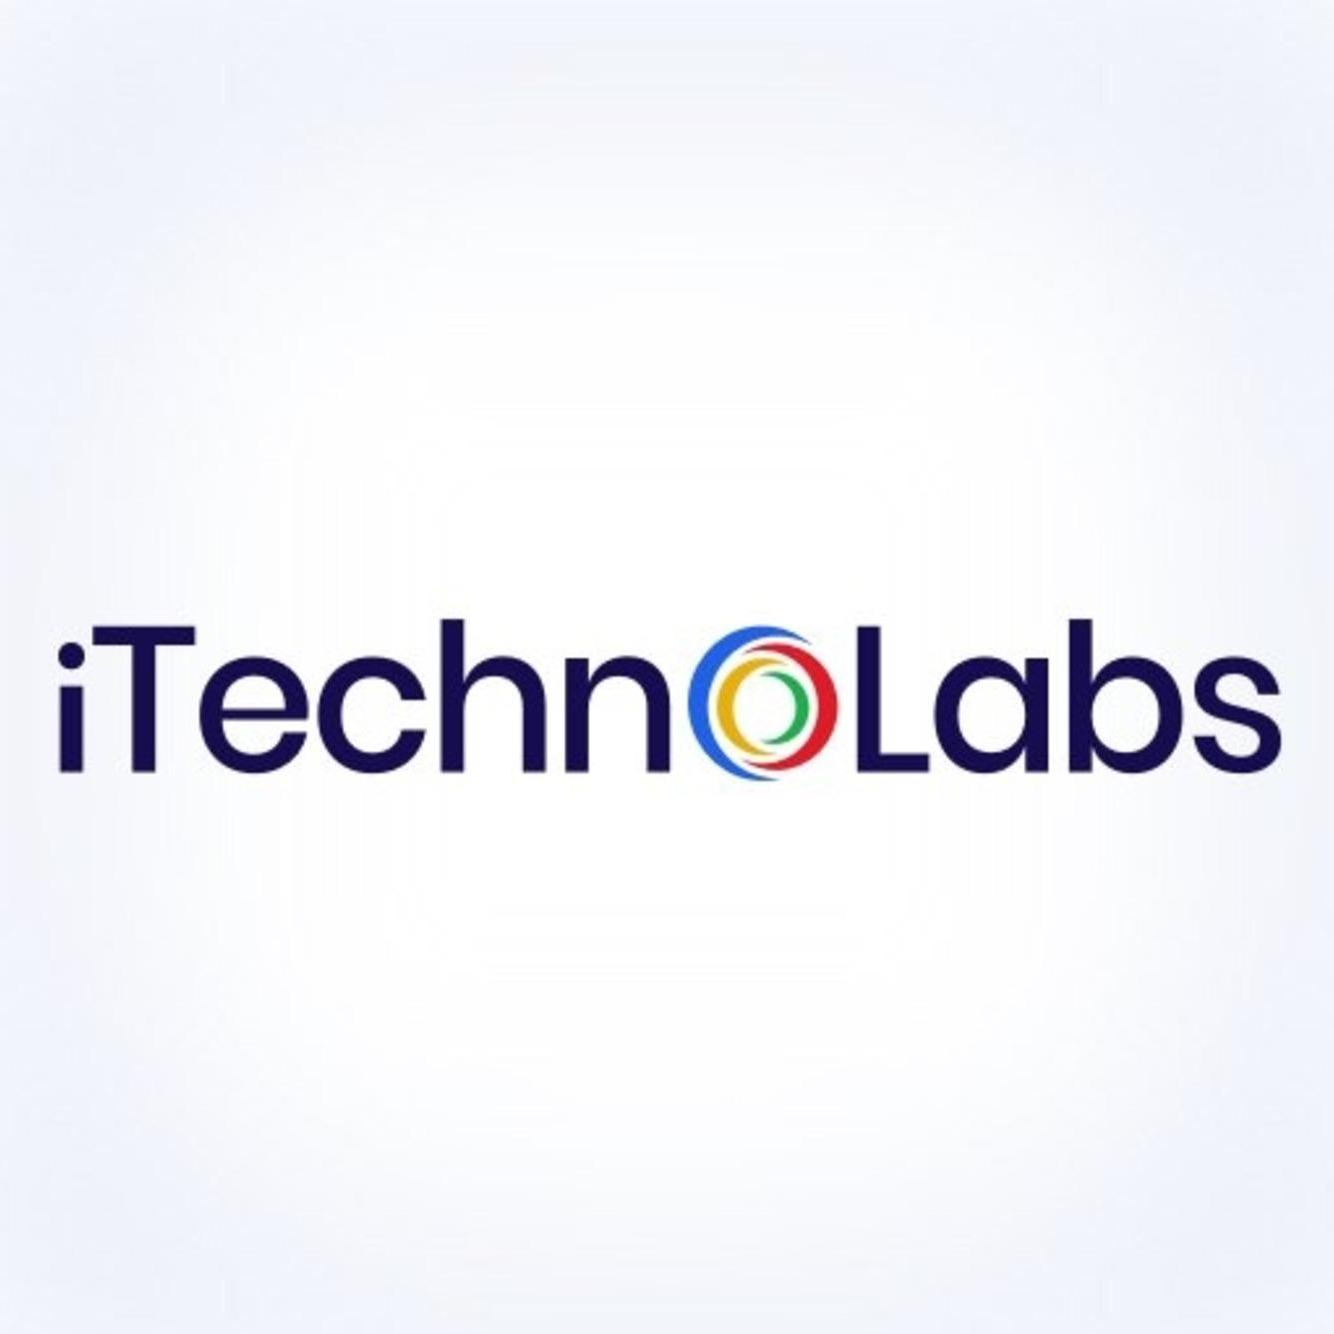 ITechno Labs